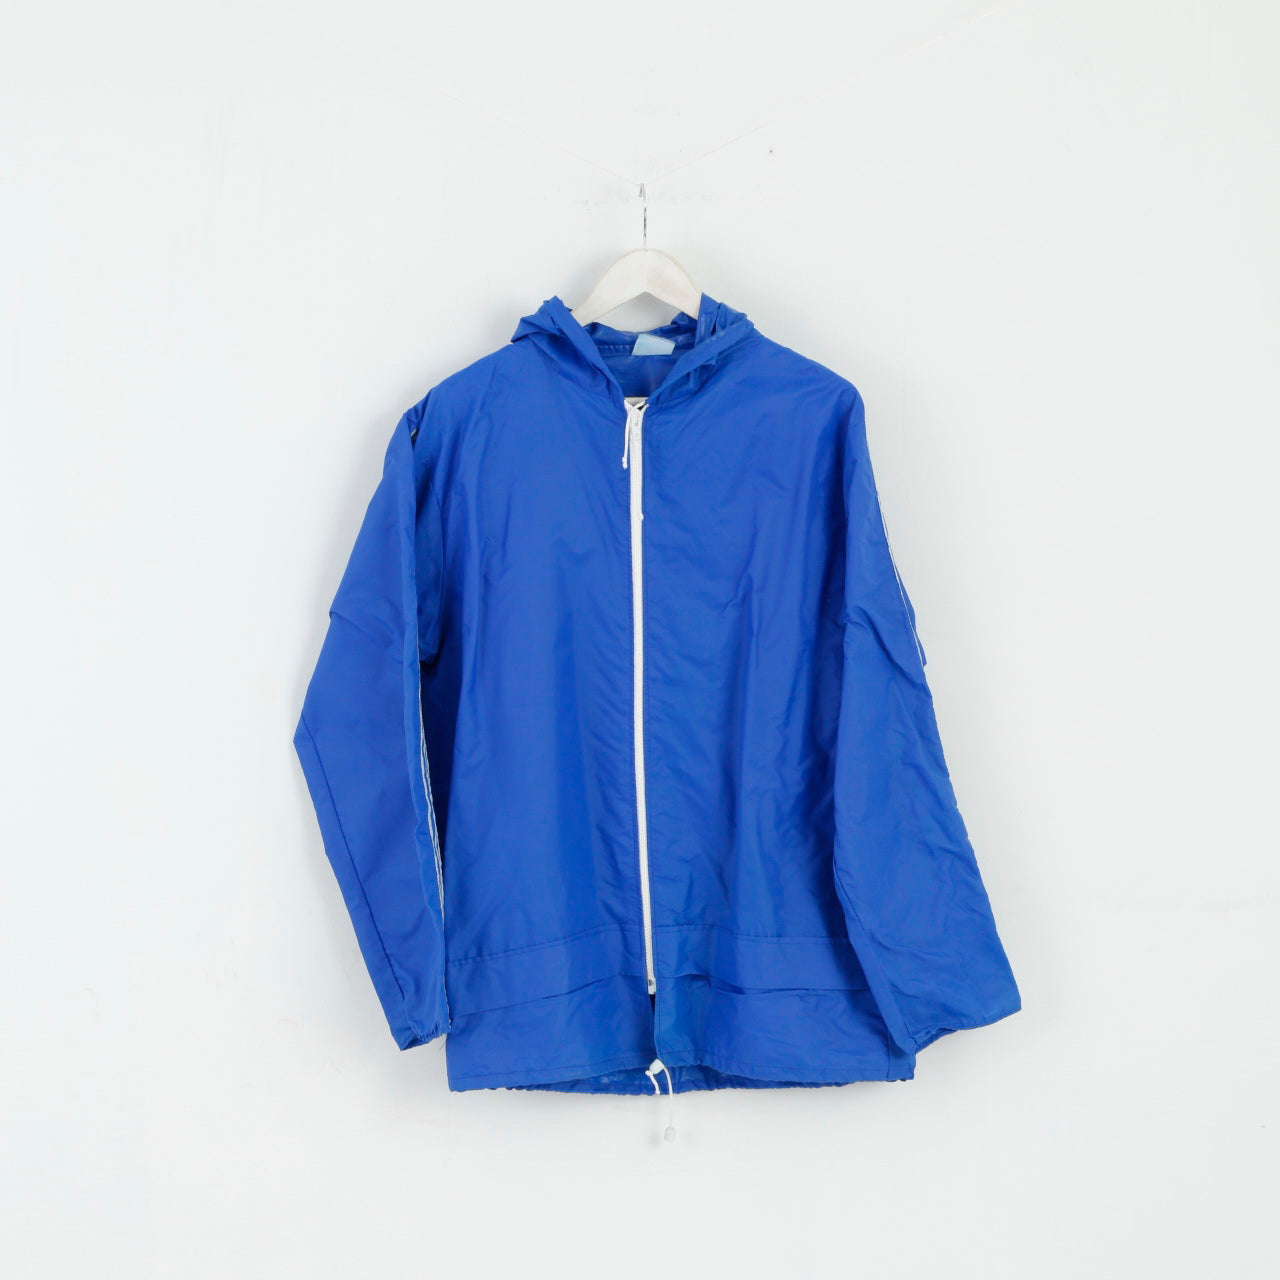 Vintage Men M Rain Jacket Blue Nylon Hooded Zip Up Lightweight Top